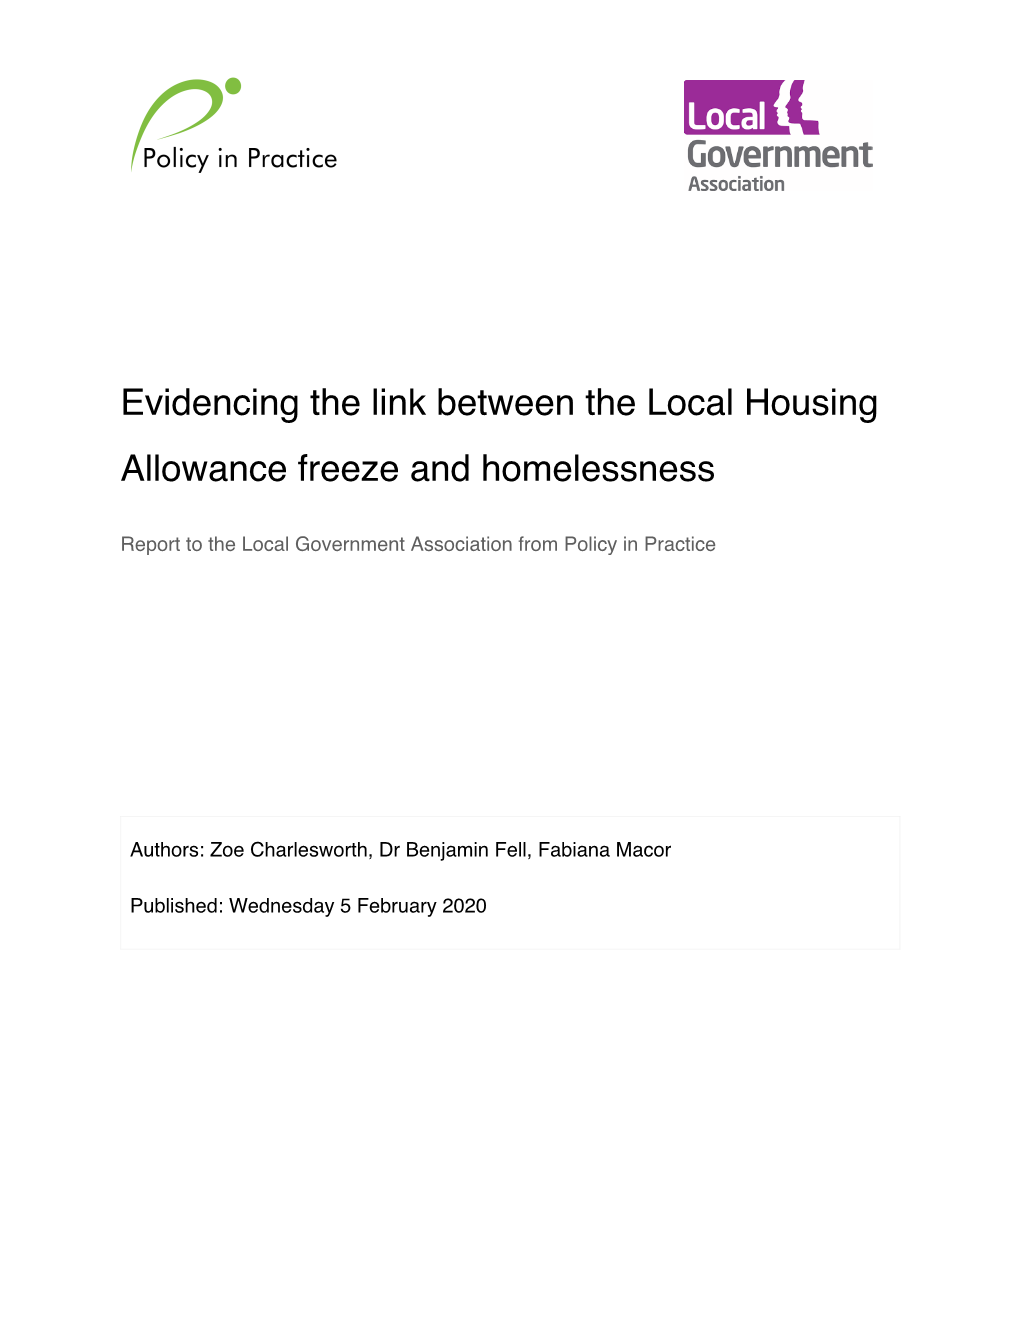 Local Housing Allowance Freeze and Homelessness